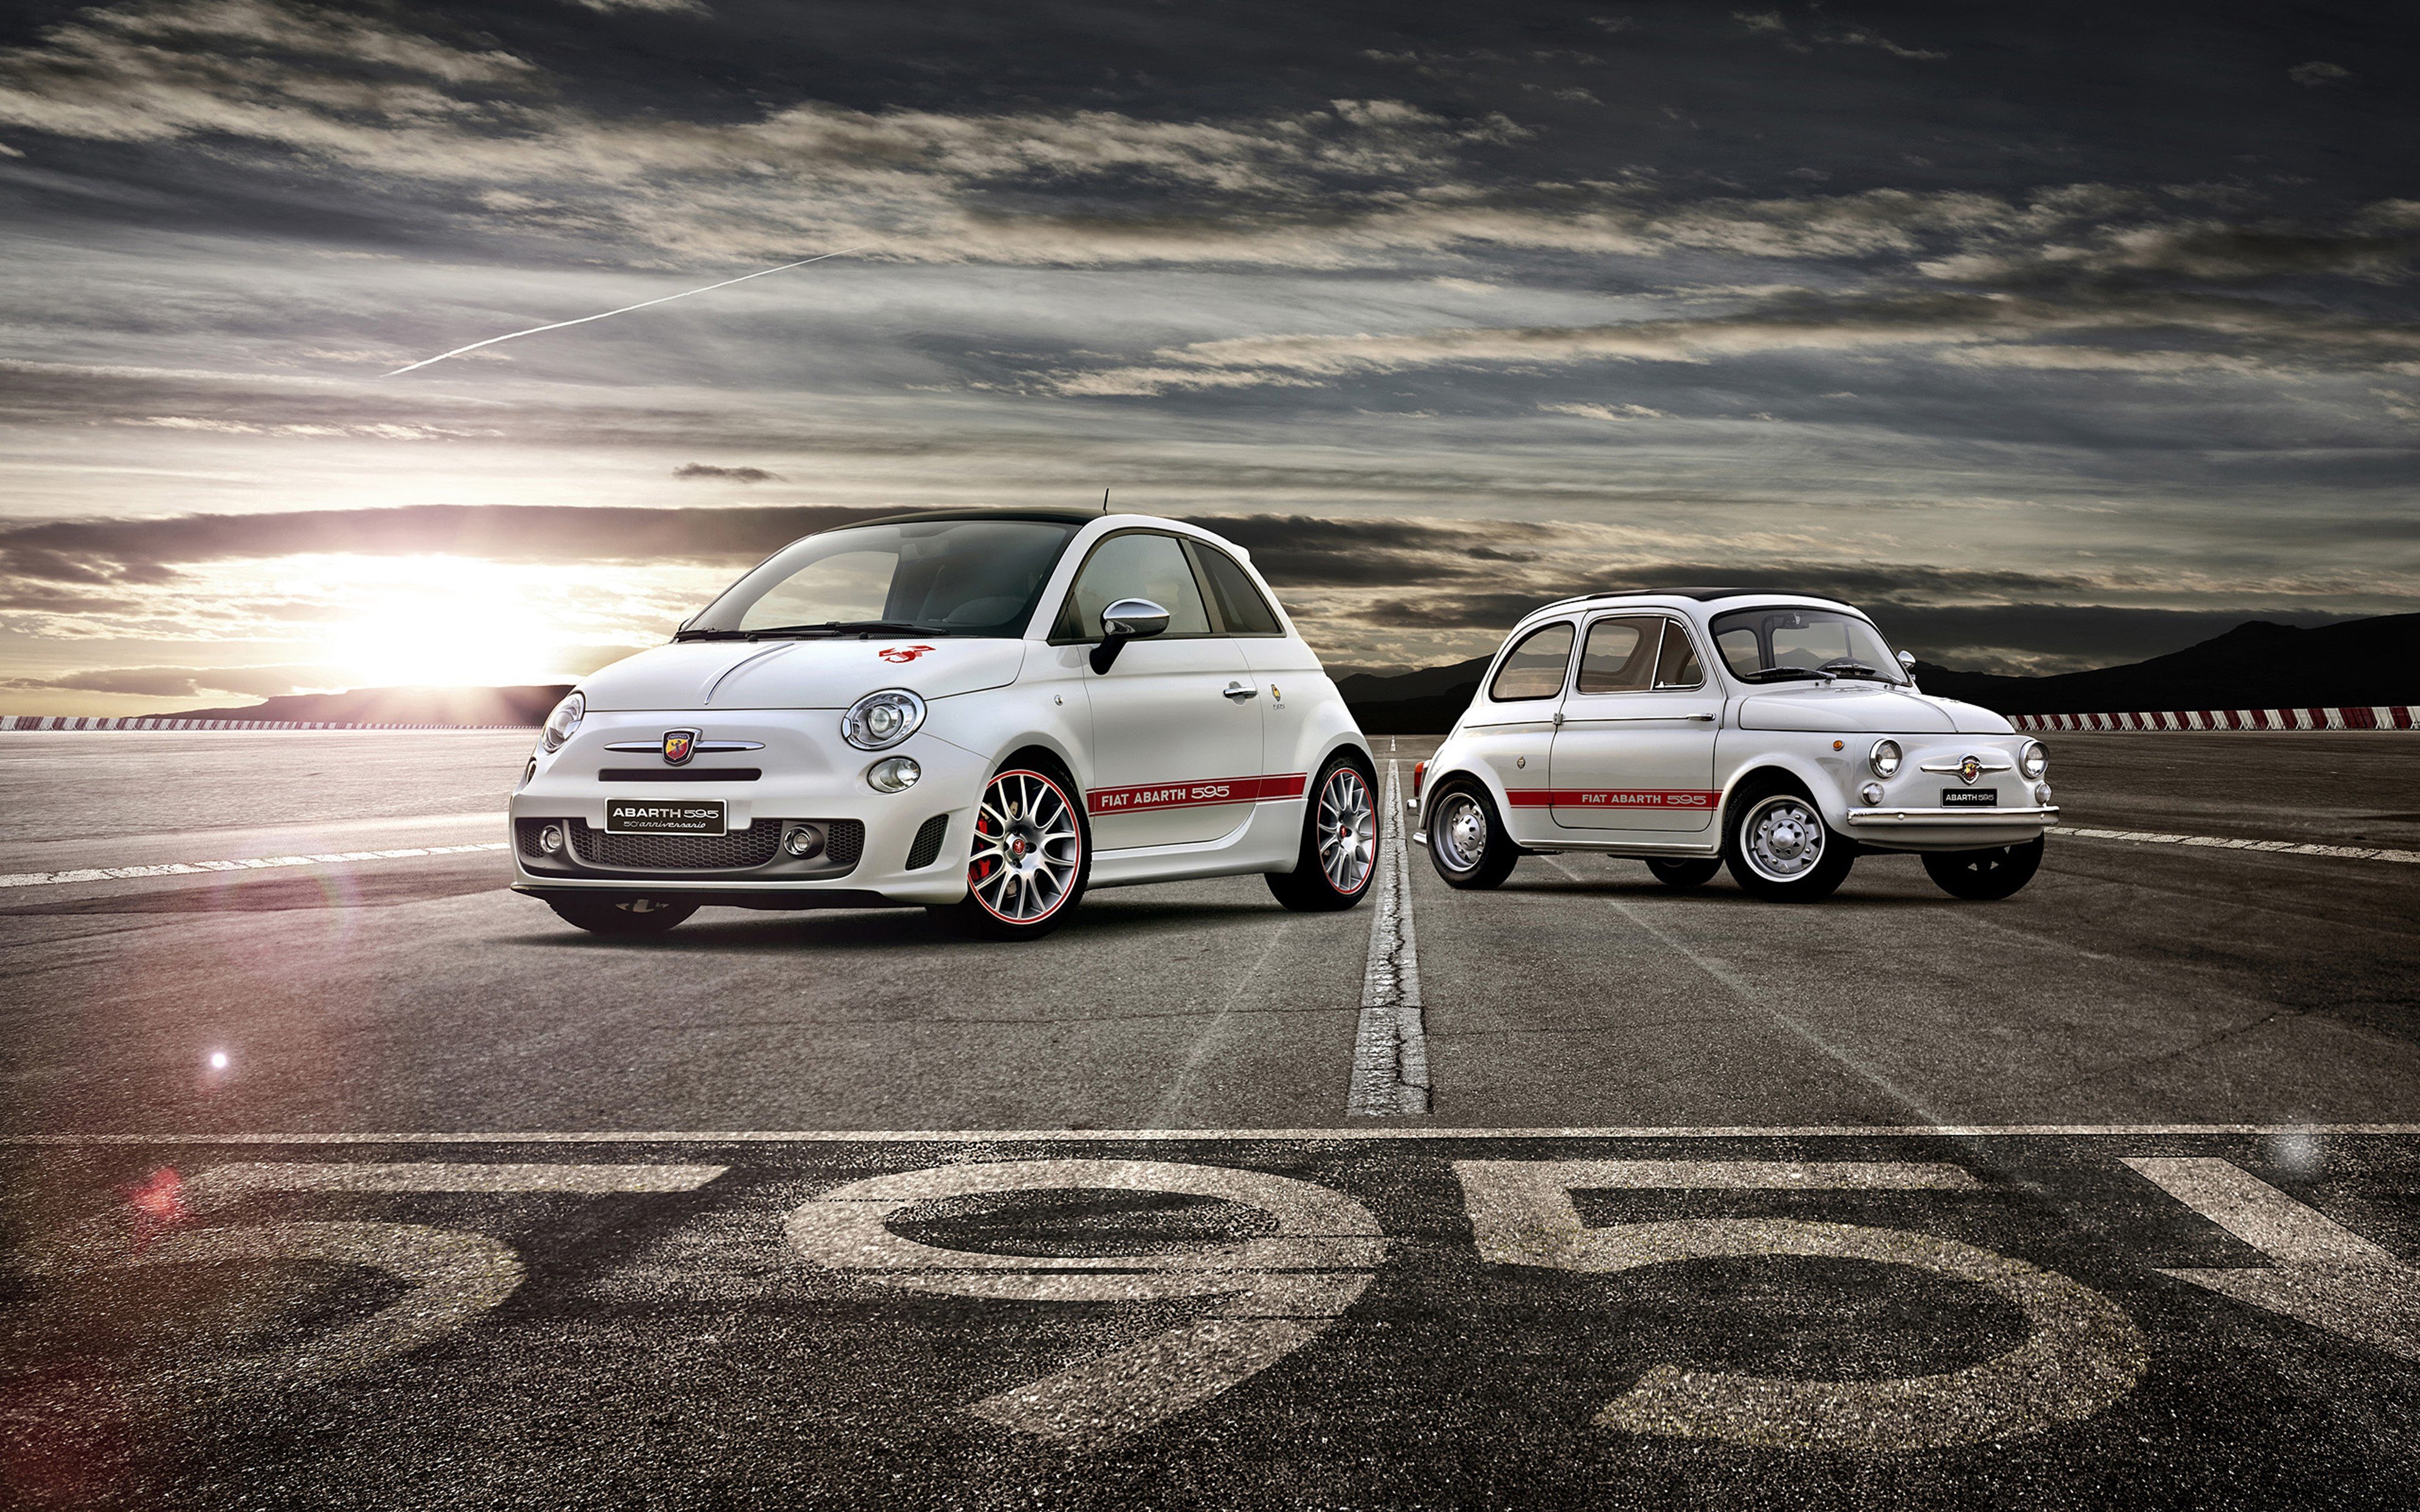 2014, Fiat, 595, Abarth, 50th anniversary, Car, Italy, 4000x2500 Wallpaper